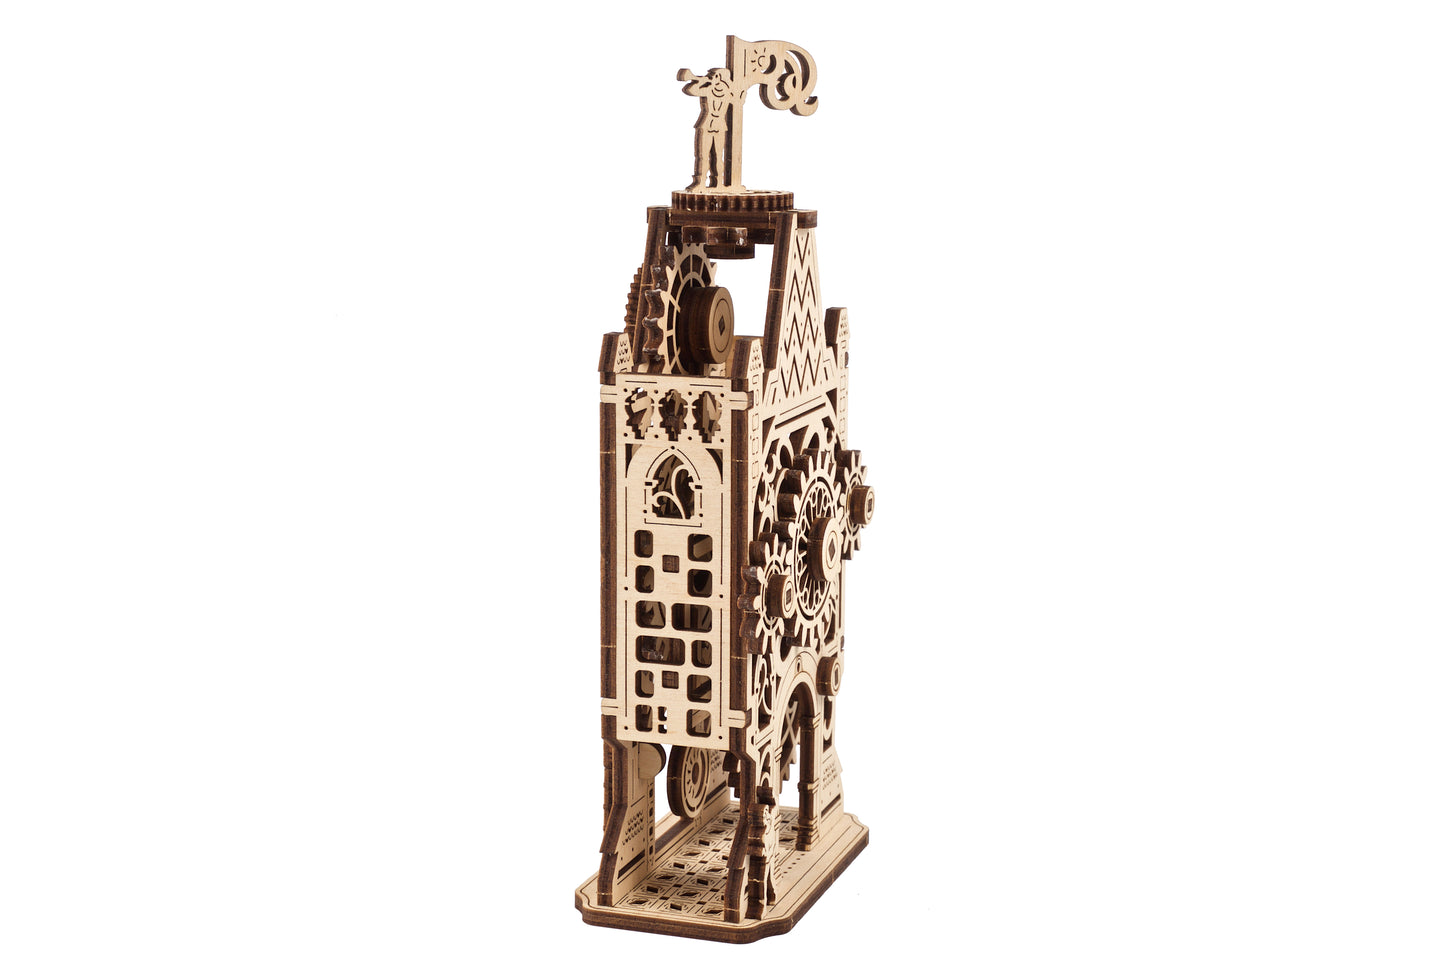 houten 3D puzzel klokkentoren - puzzle 3D en bois clocher